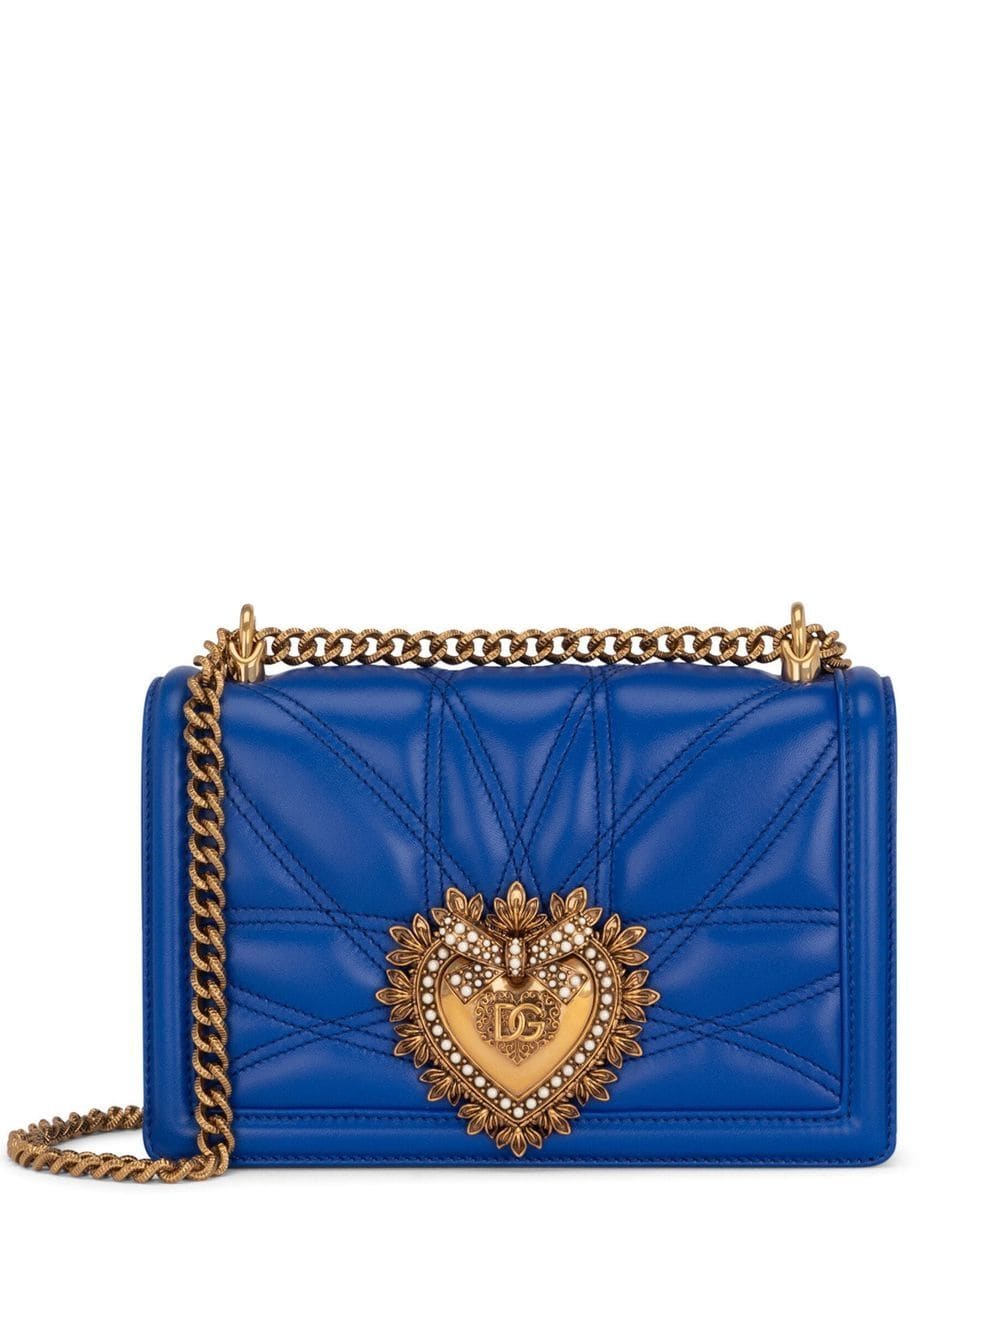 Dolce & Gabbana Devotion Leather Crossbody Bag In Blue